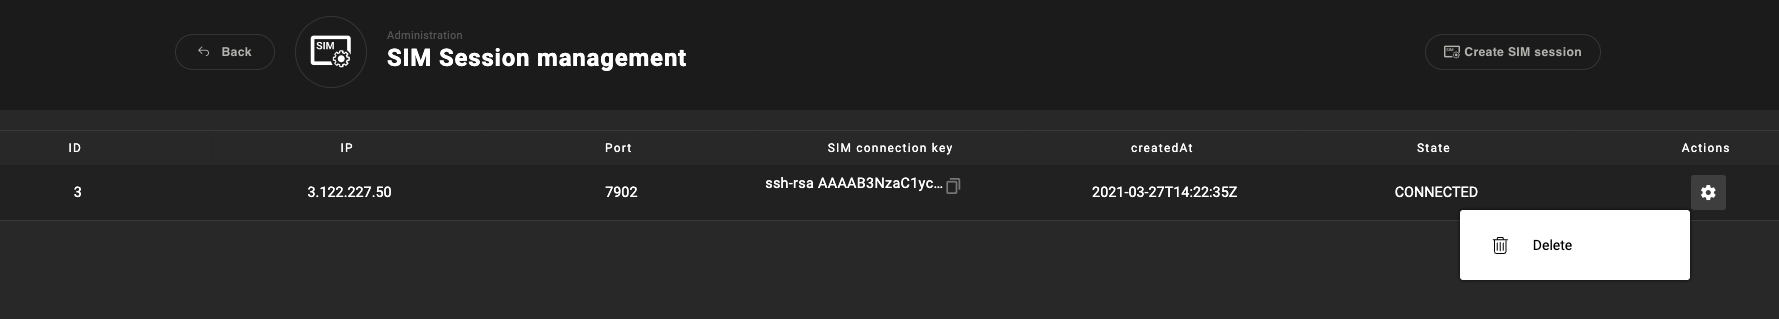 Disconnect a SIM session